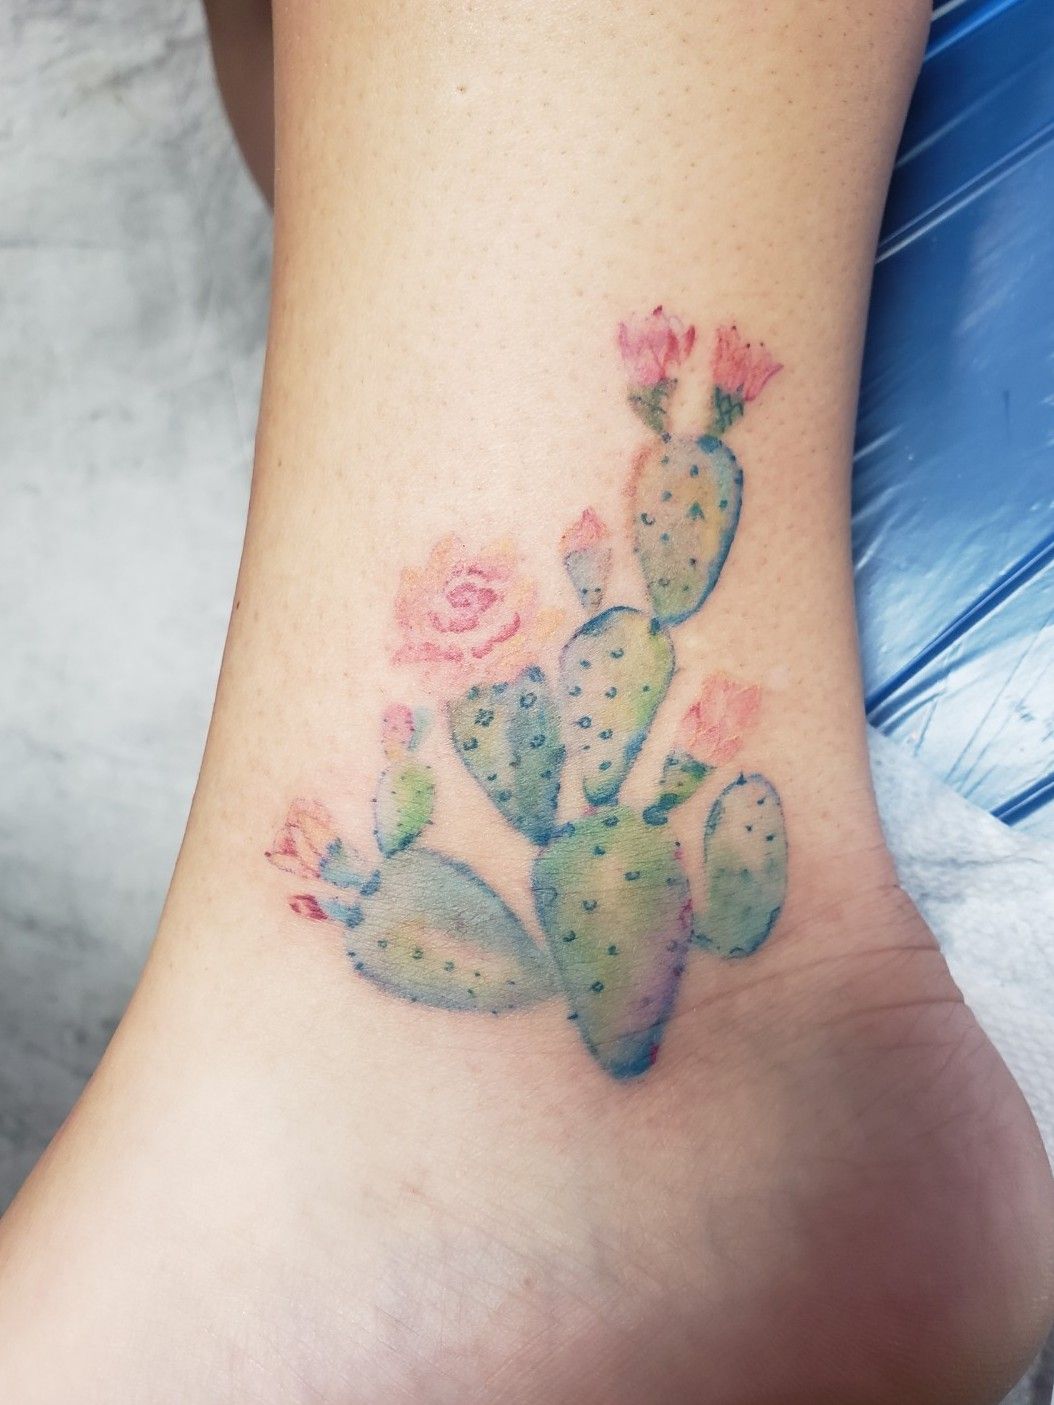 C W e b b on Instagram Prickly pear cactus for Shauna Thanks again  Cactus  tattoo Tattoos Prickly pear cactus